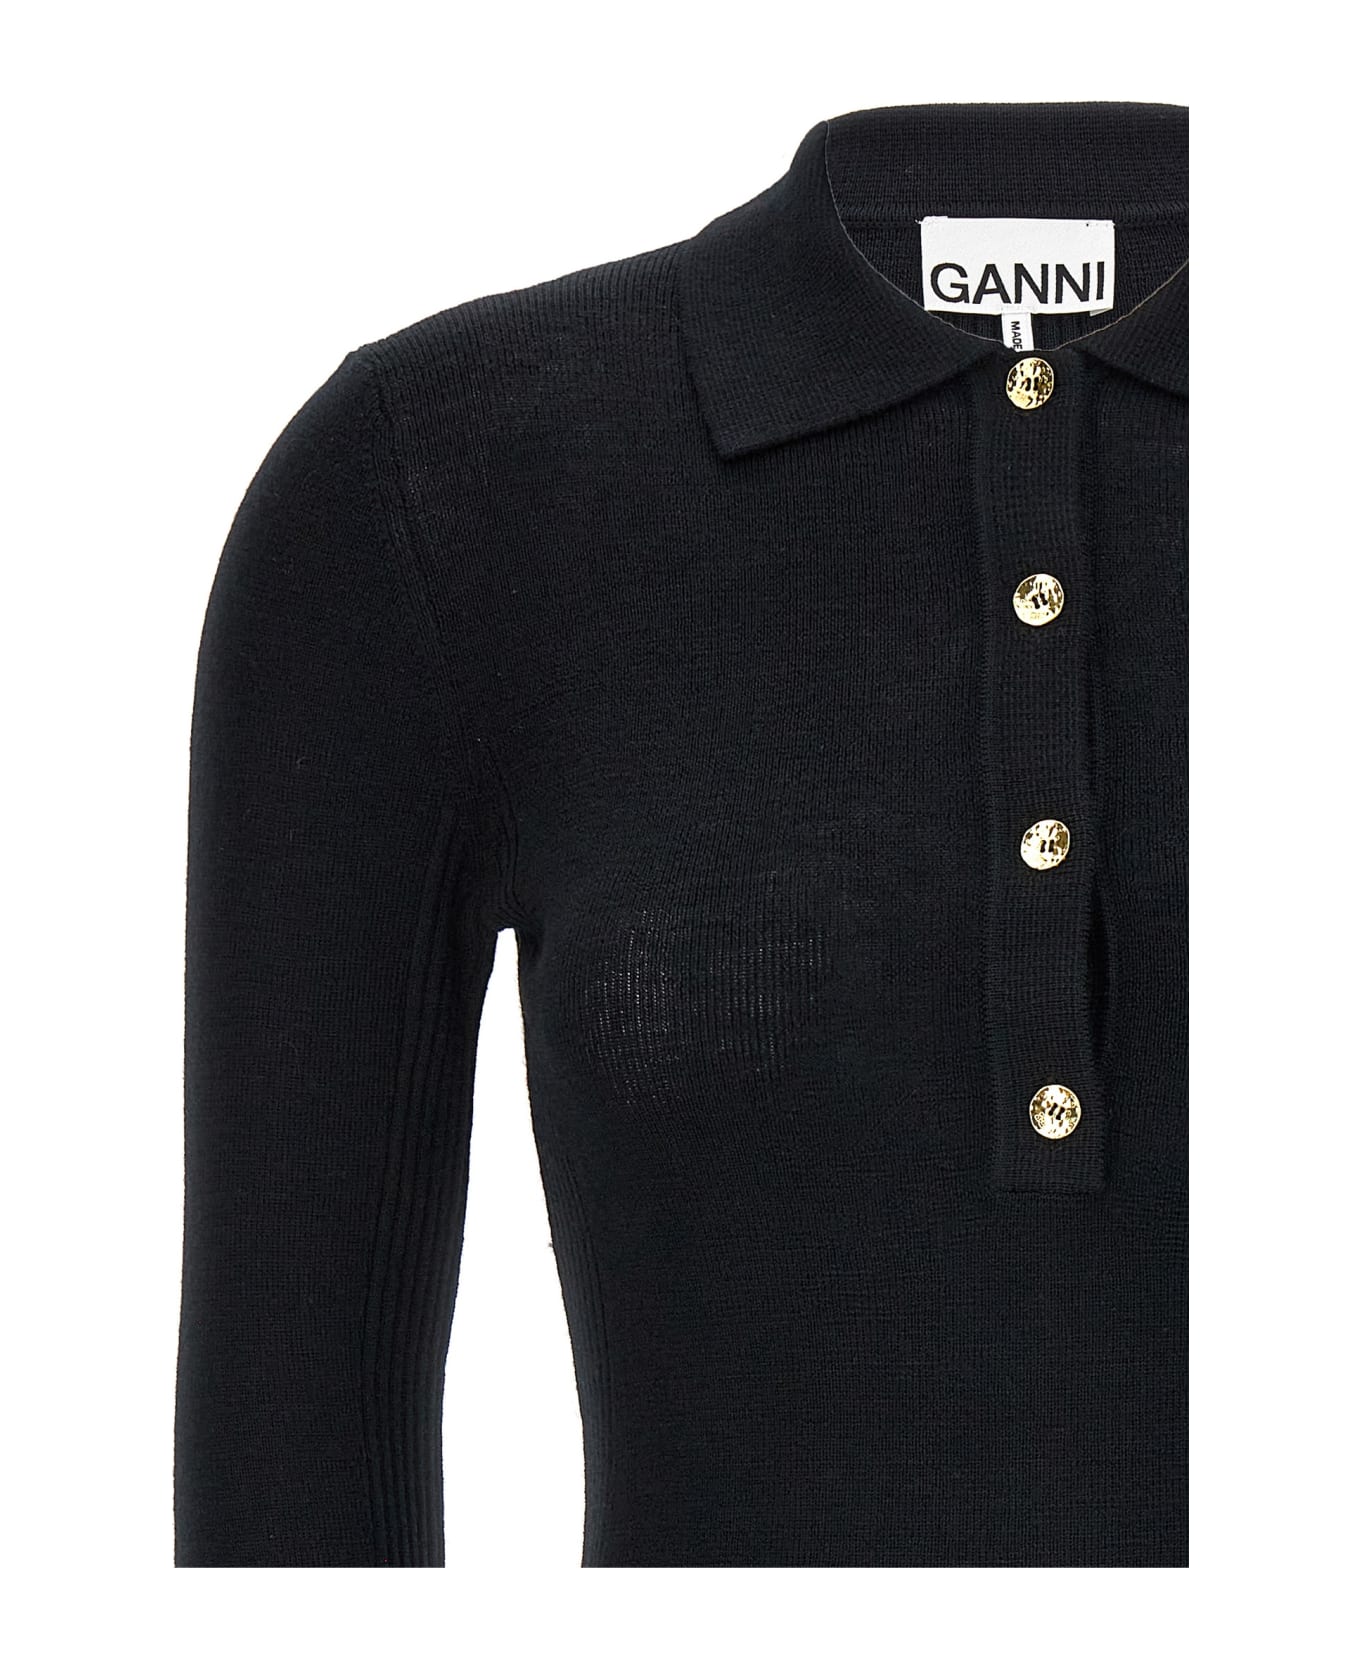 Ganni Logo Embroidery Sweater - Black  